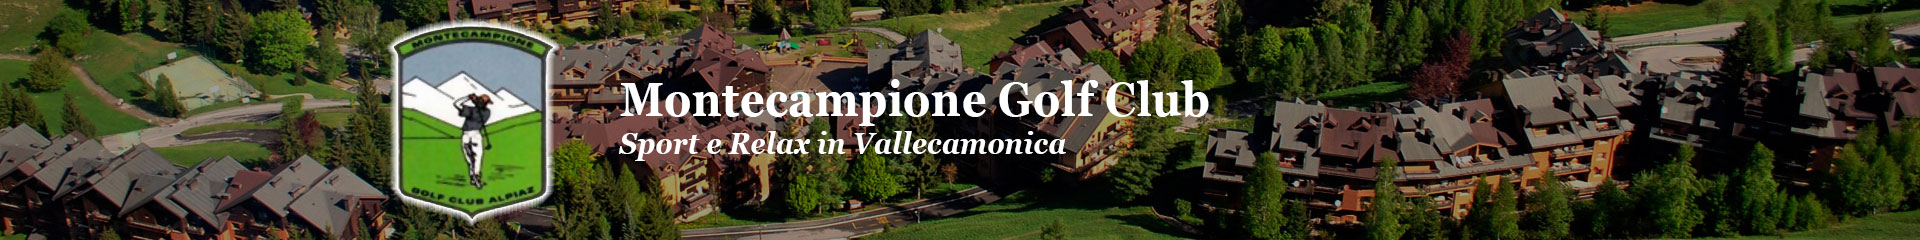 Montecampione Golf Club Alpiaz A.S.D. - Quote Associative anno 2019